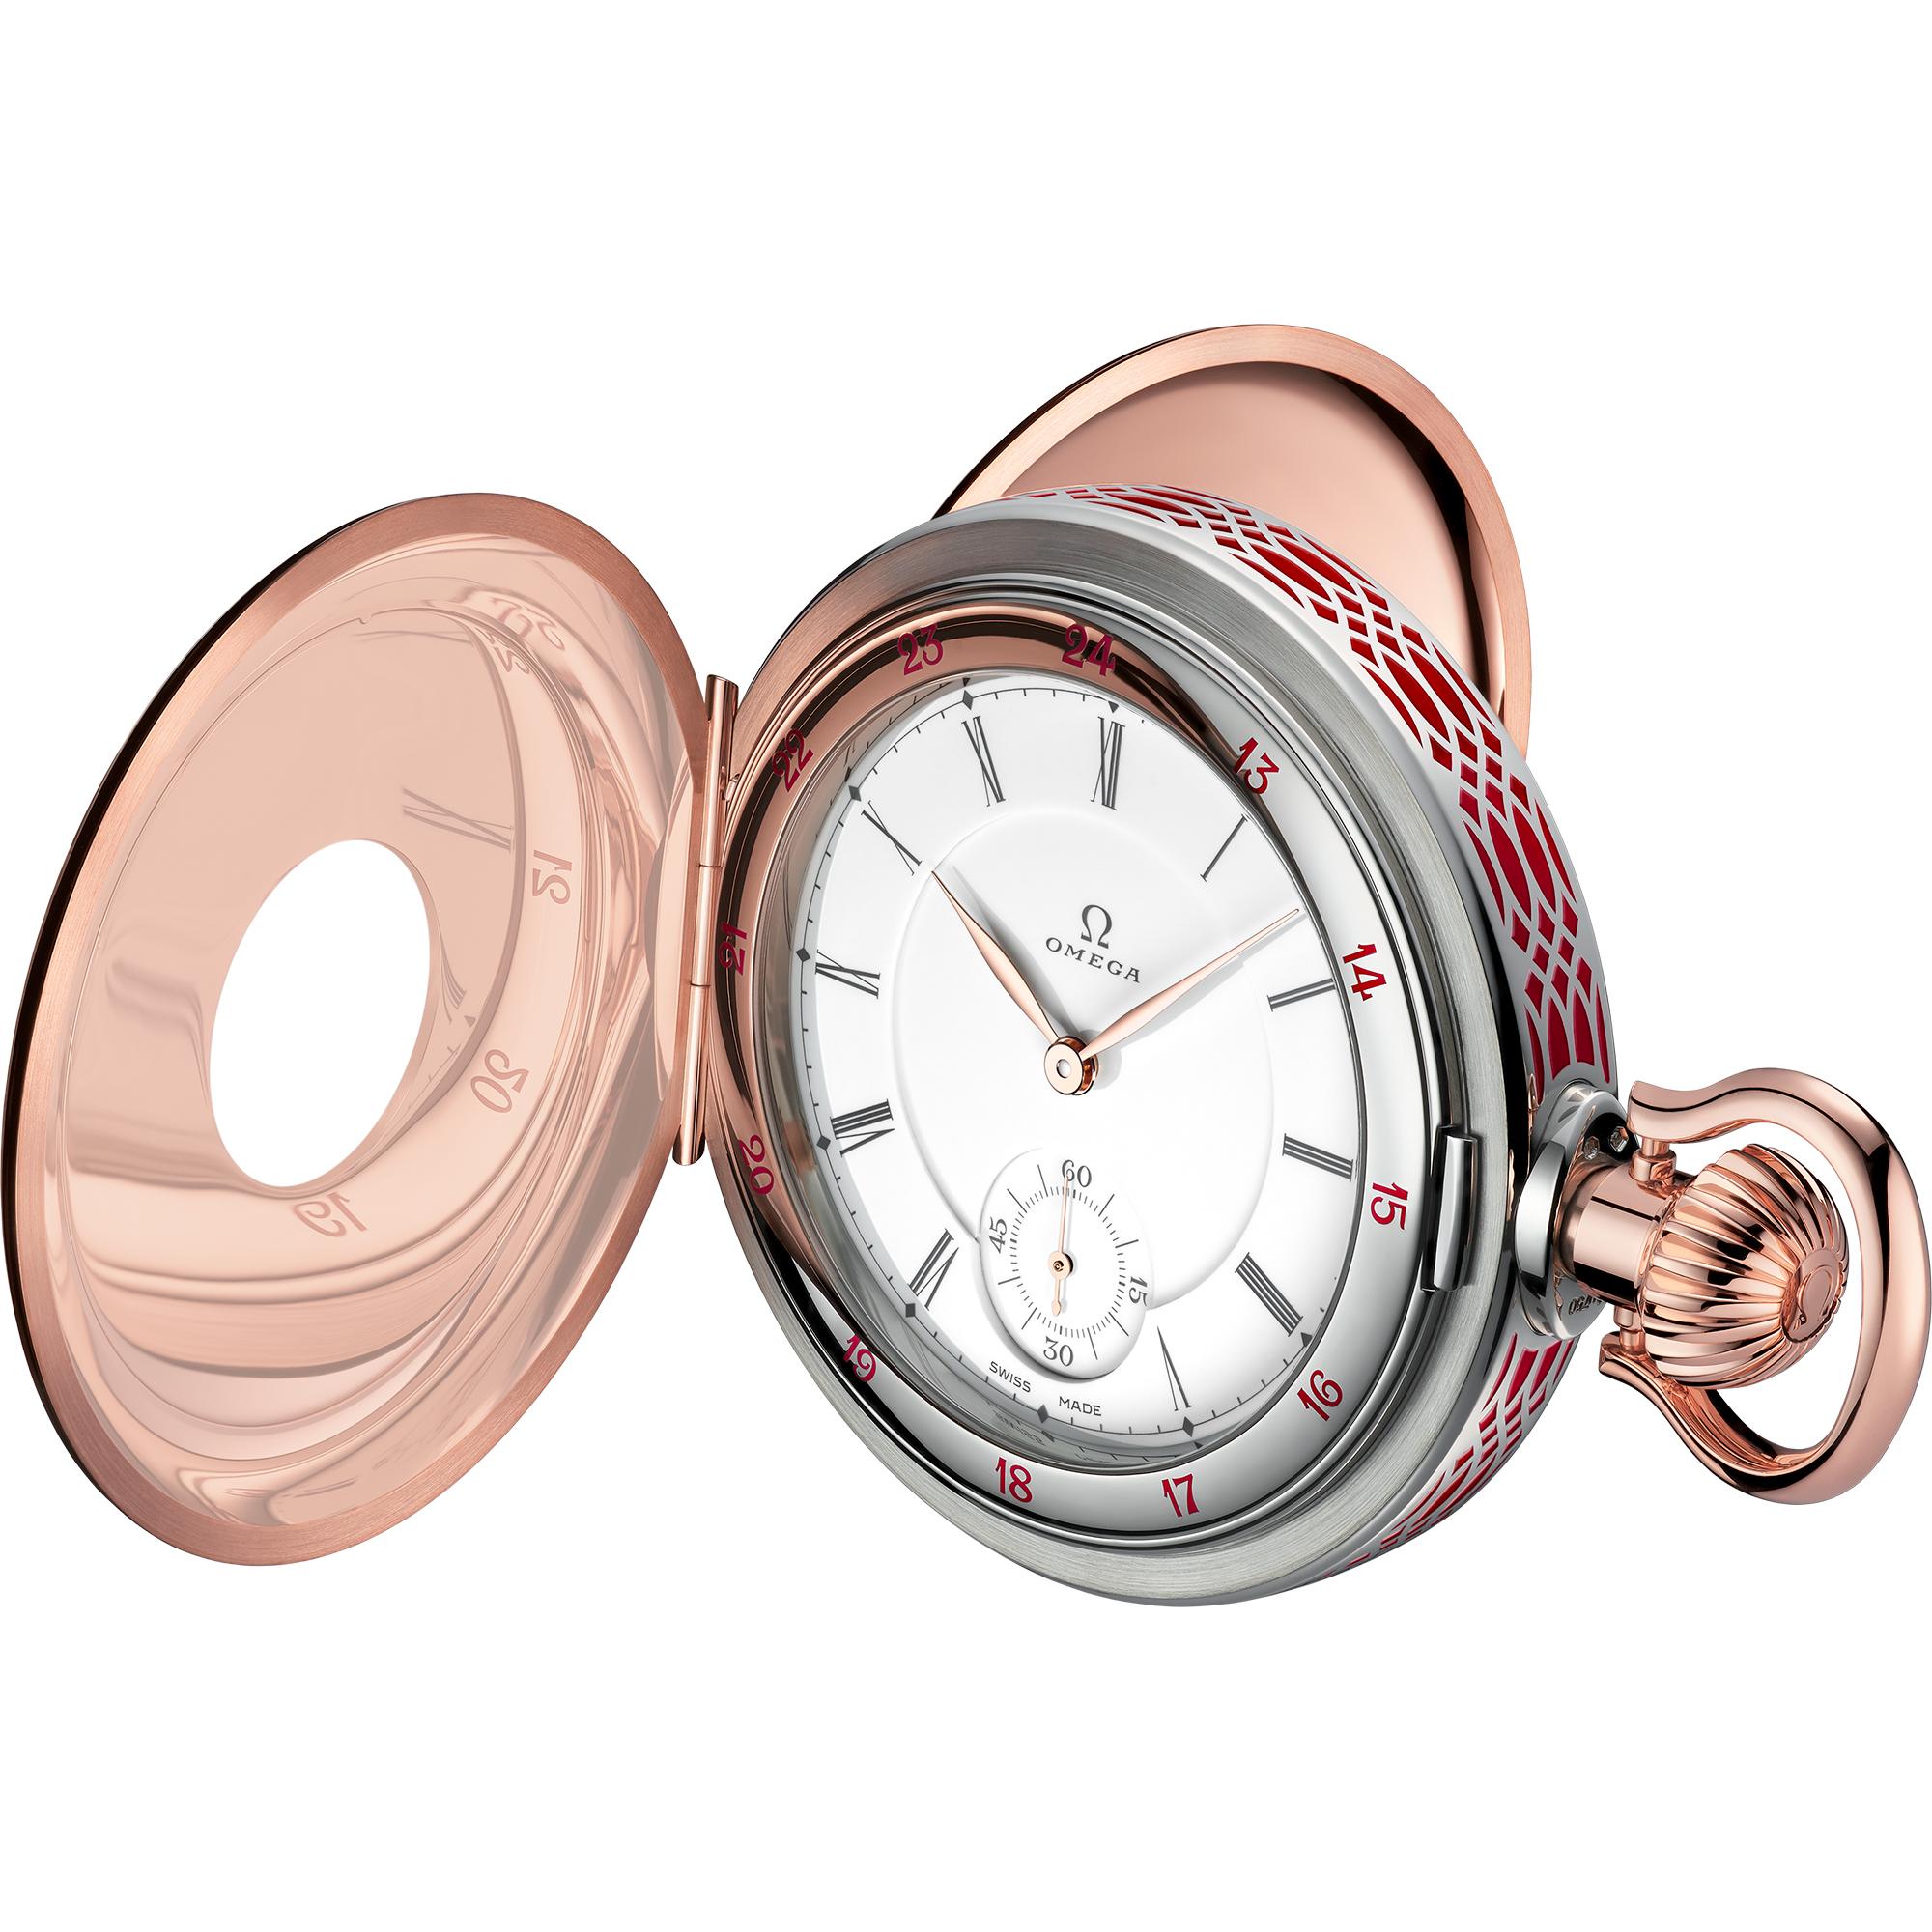 Specialities OMEGA 125th Anniversary Pocket Watch 60 มม., ทอง Sedna™ - ทอง Canopus™ - 518.62.60.00.04.001